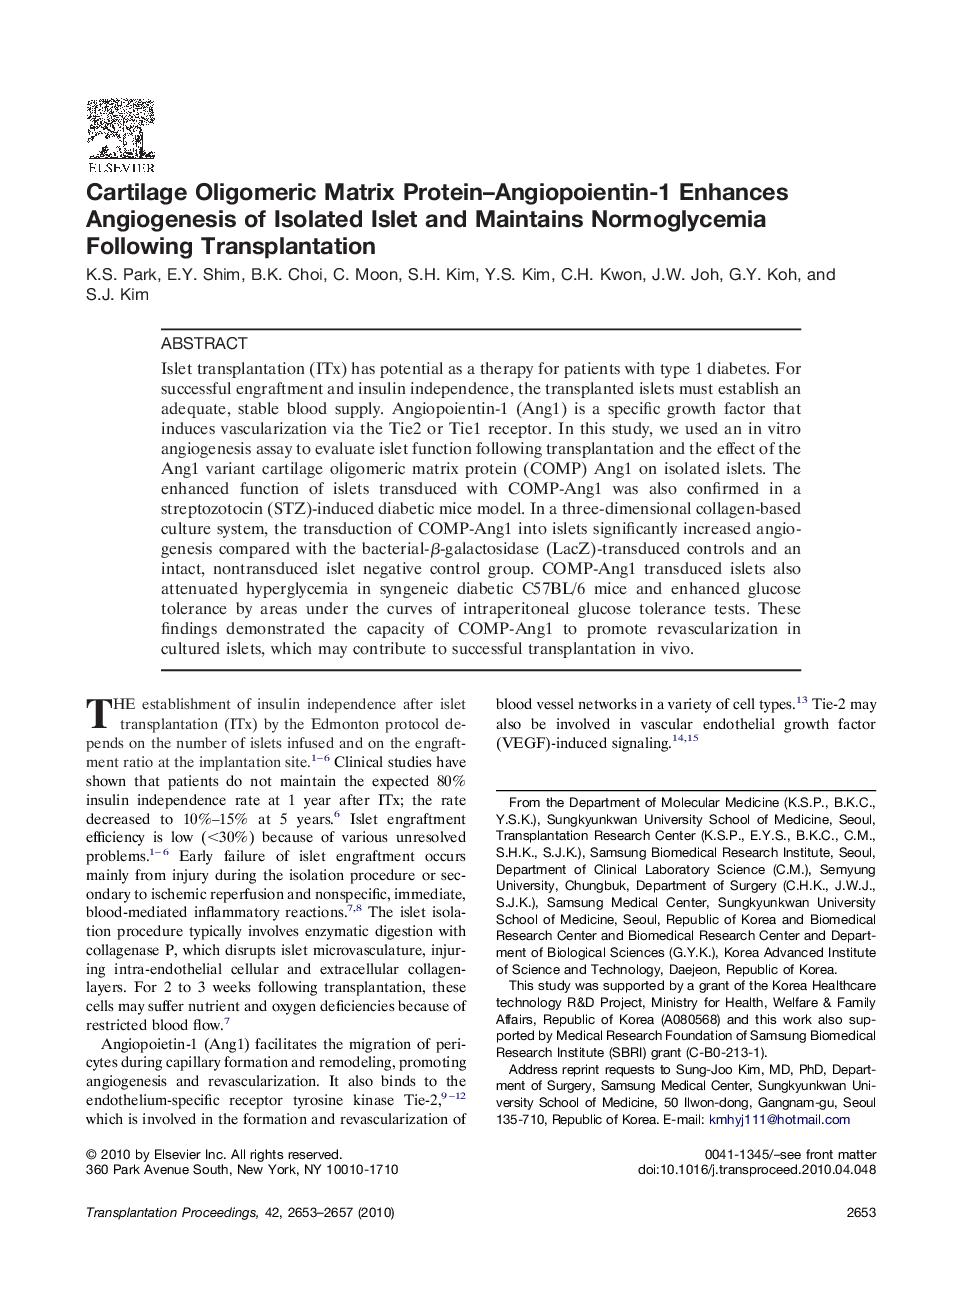 Cartilage Oligomeric Matrix Protein–Angiopoientin-1 Enhances Angiogenesis of Isolated Islet and Maintains Normoglycemia Following Transplantation 